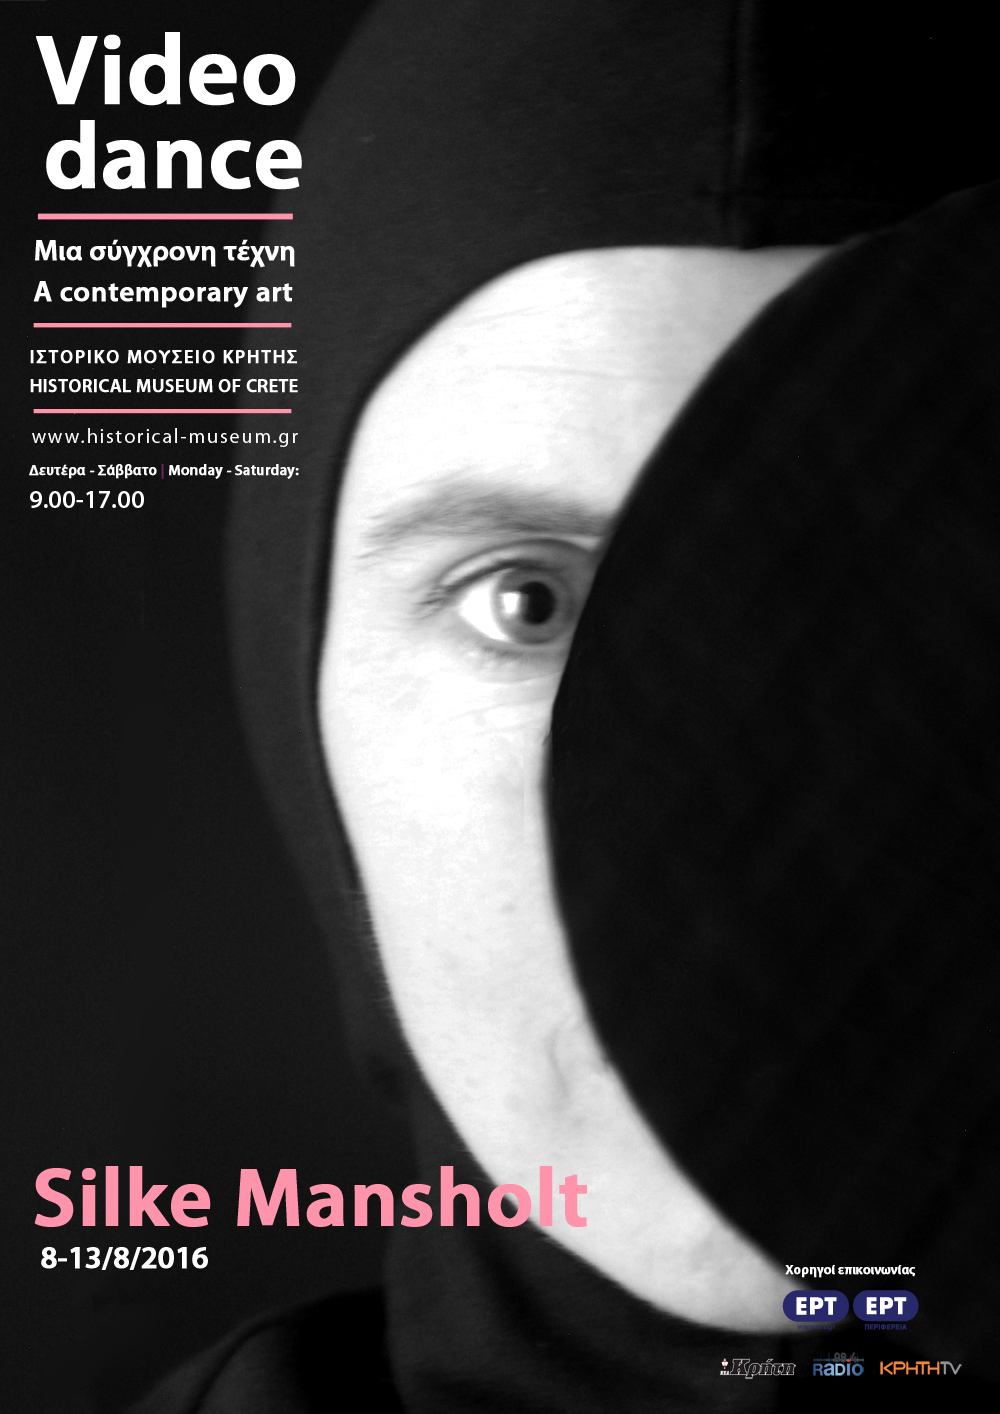 Silke Mansholt